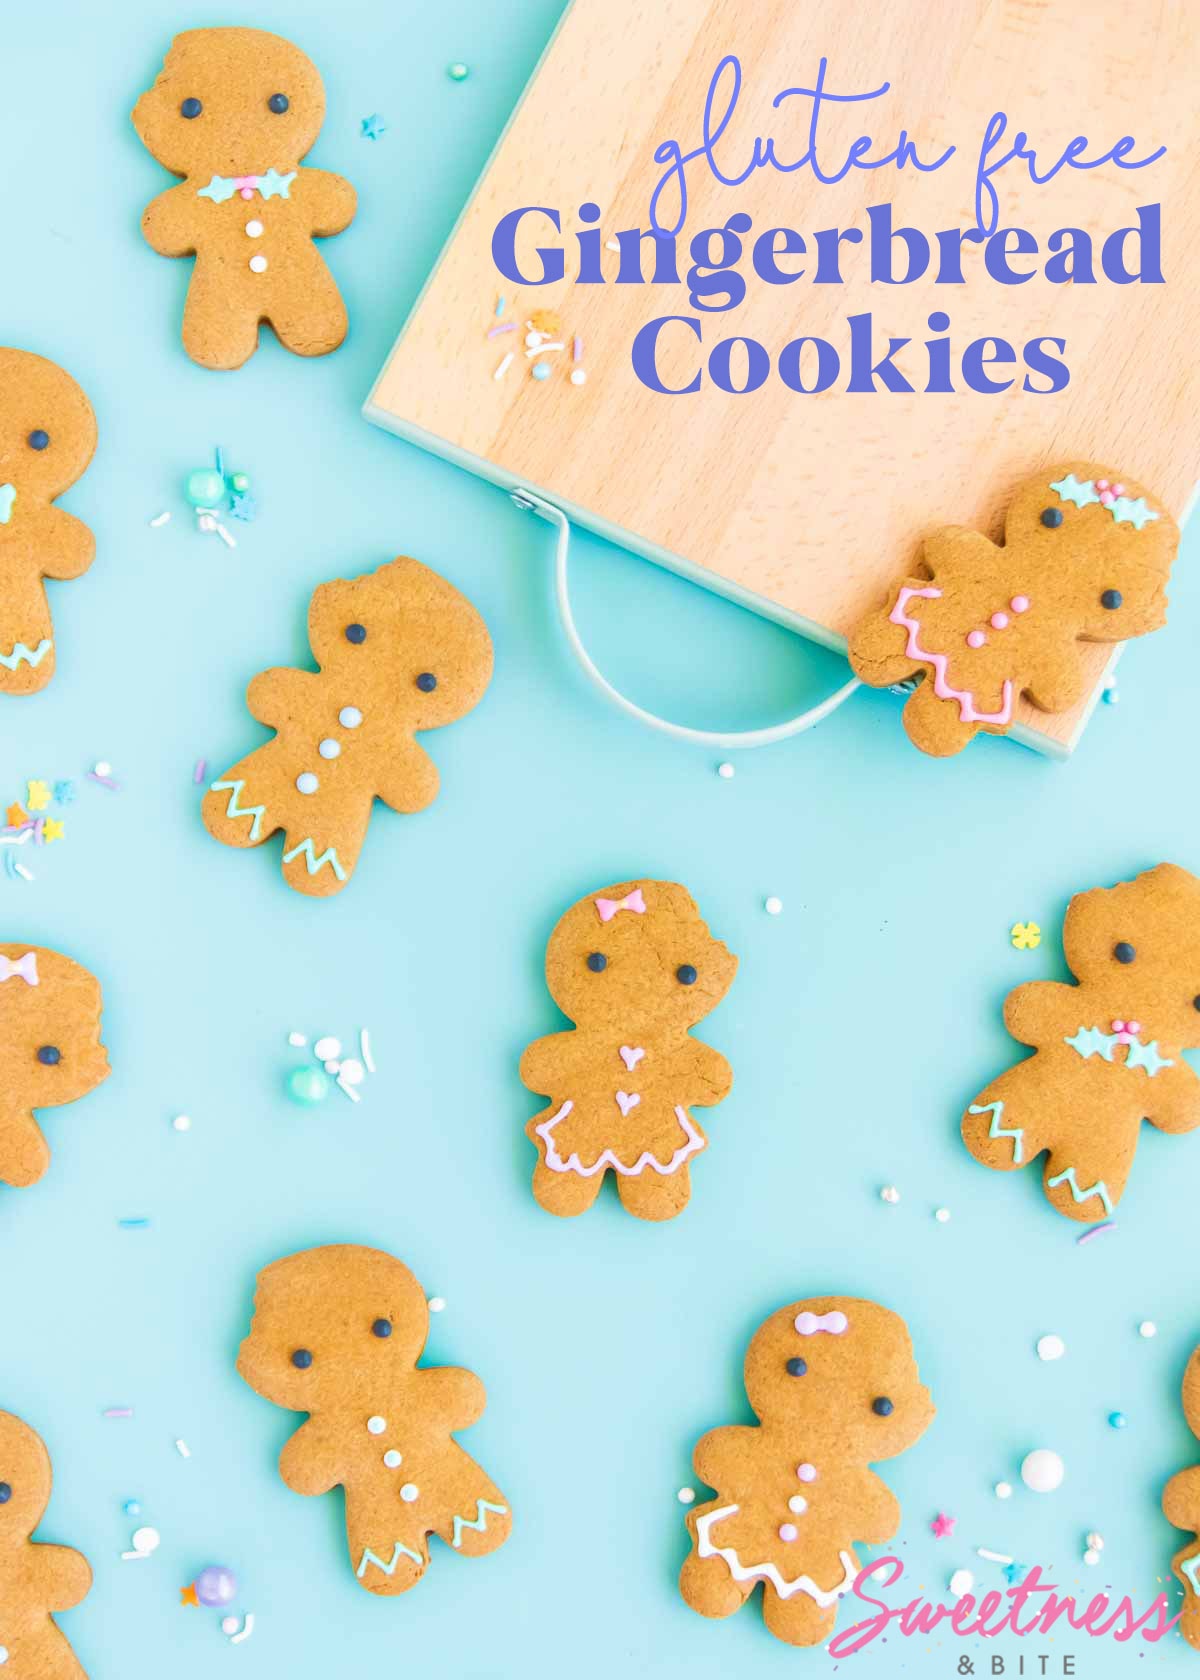 Wilton Gingerbread Man Woman 4pc Cookie Cutter Set for sale online